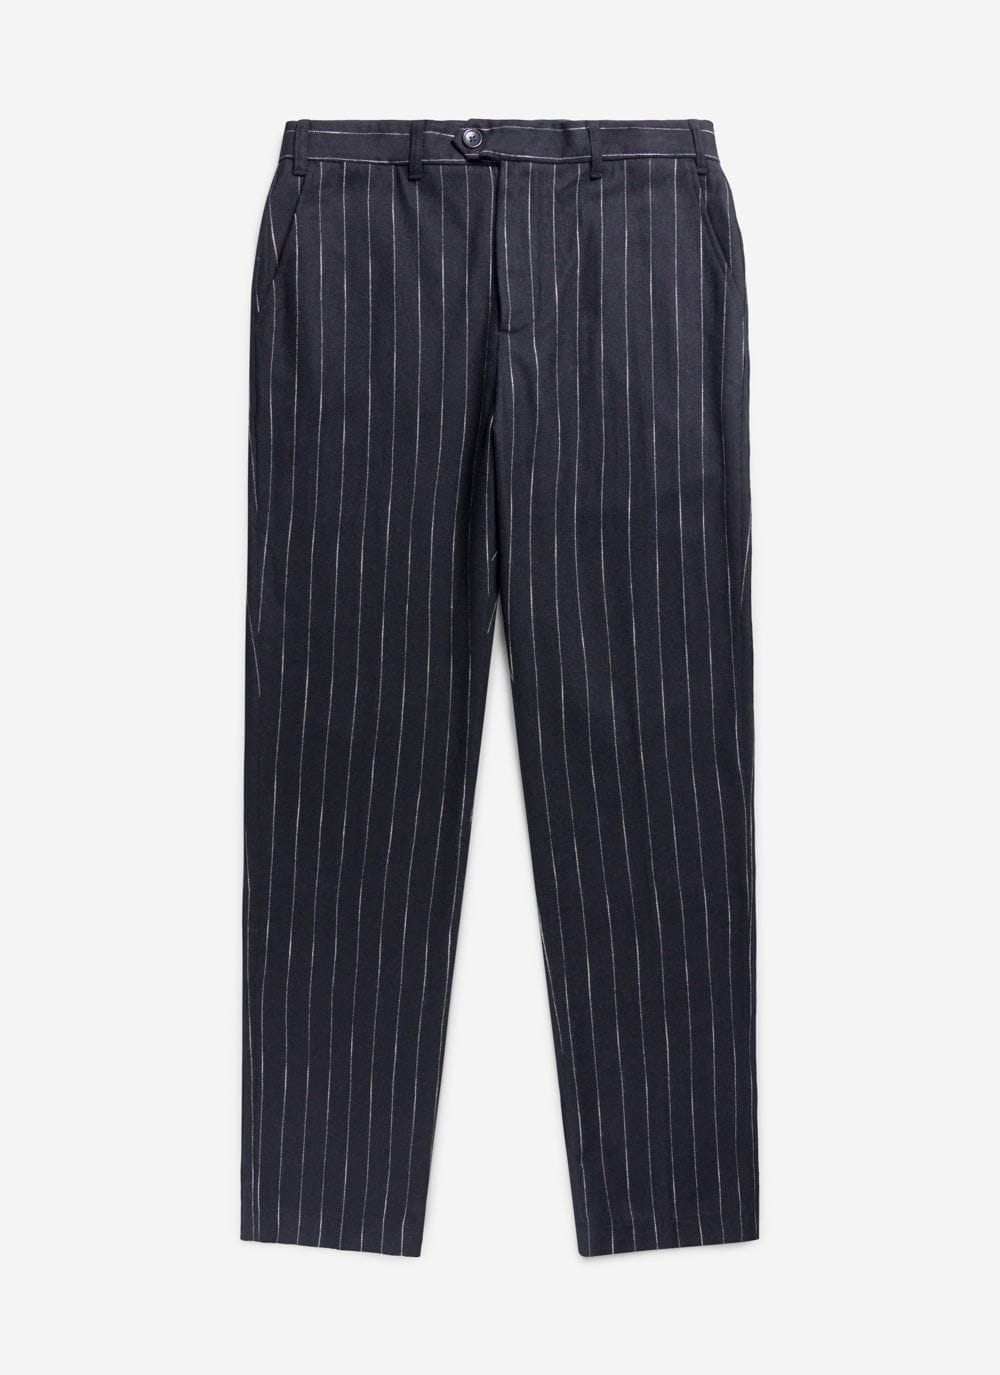 Men's Pinstripe Tailored Trousers | Wool | Black